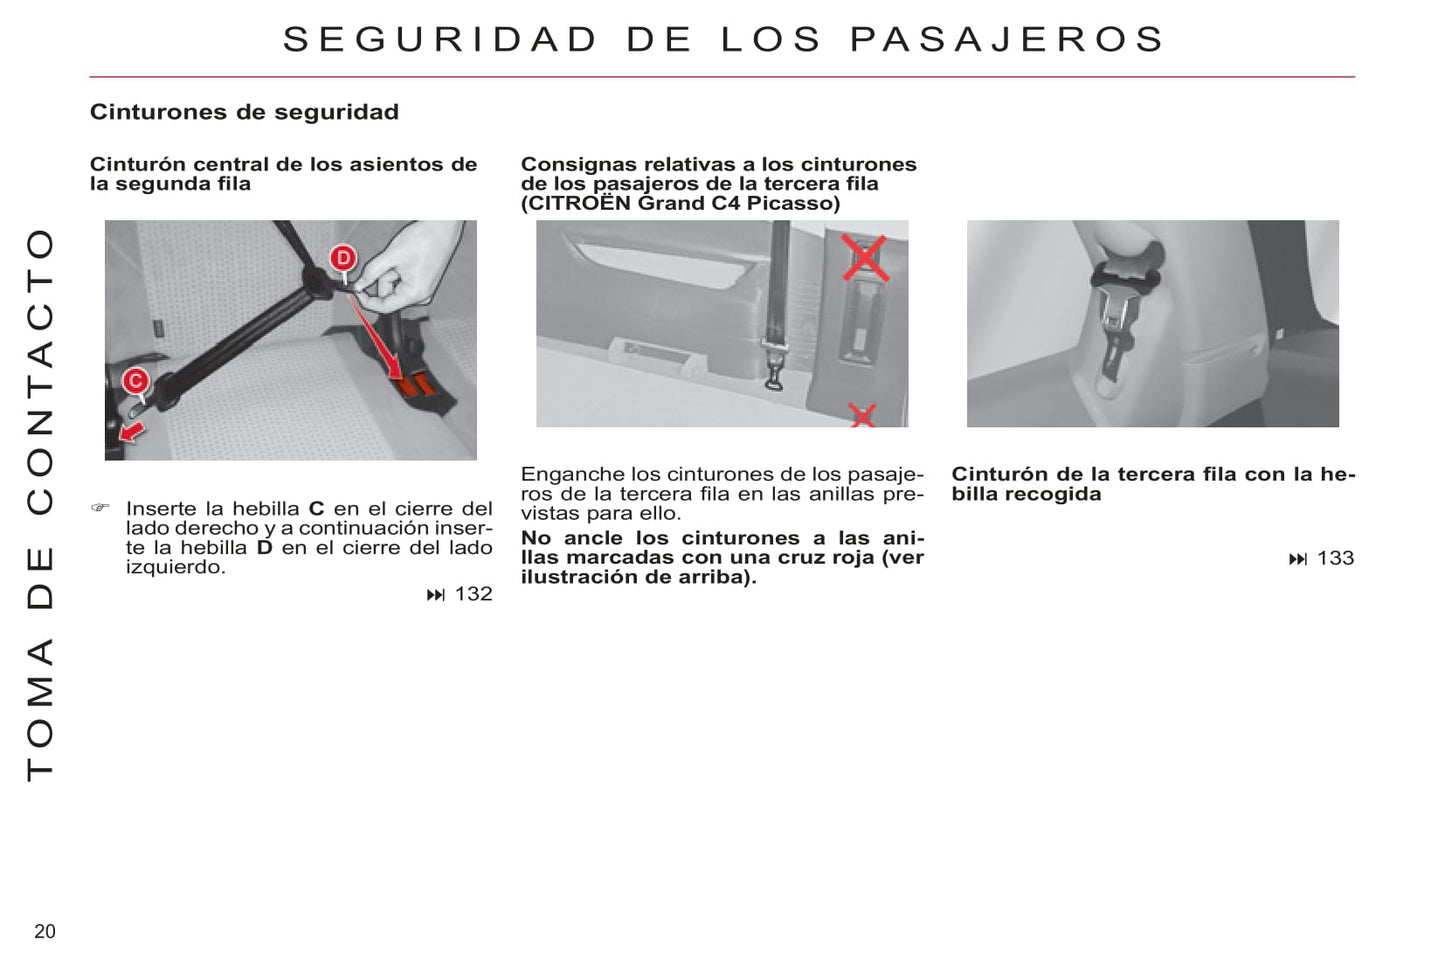 2006-2013 Citroën C4 Picasso/Grand C4 Picasso Gebruikershandleiding | Spaans